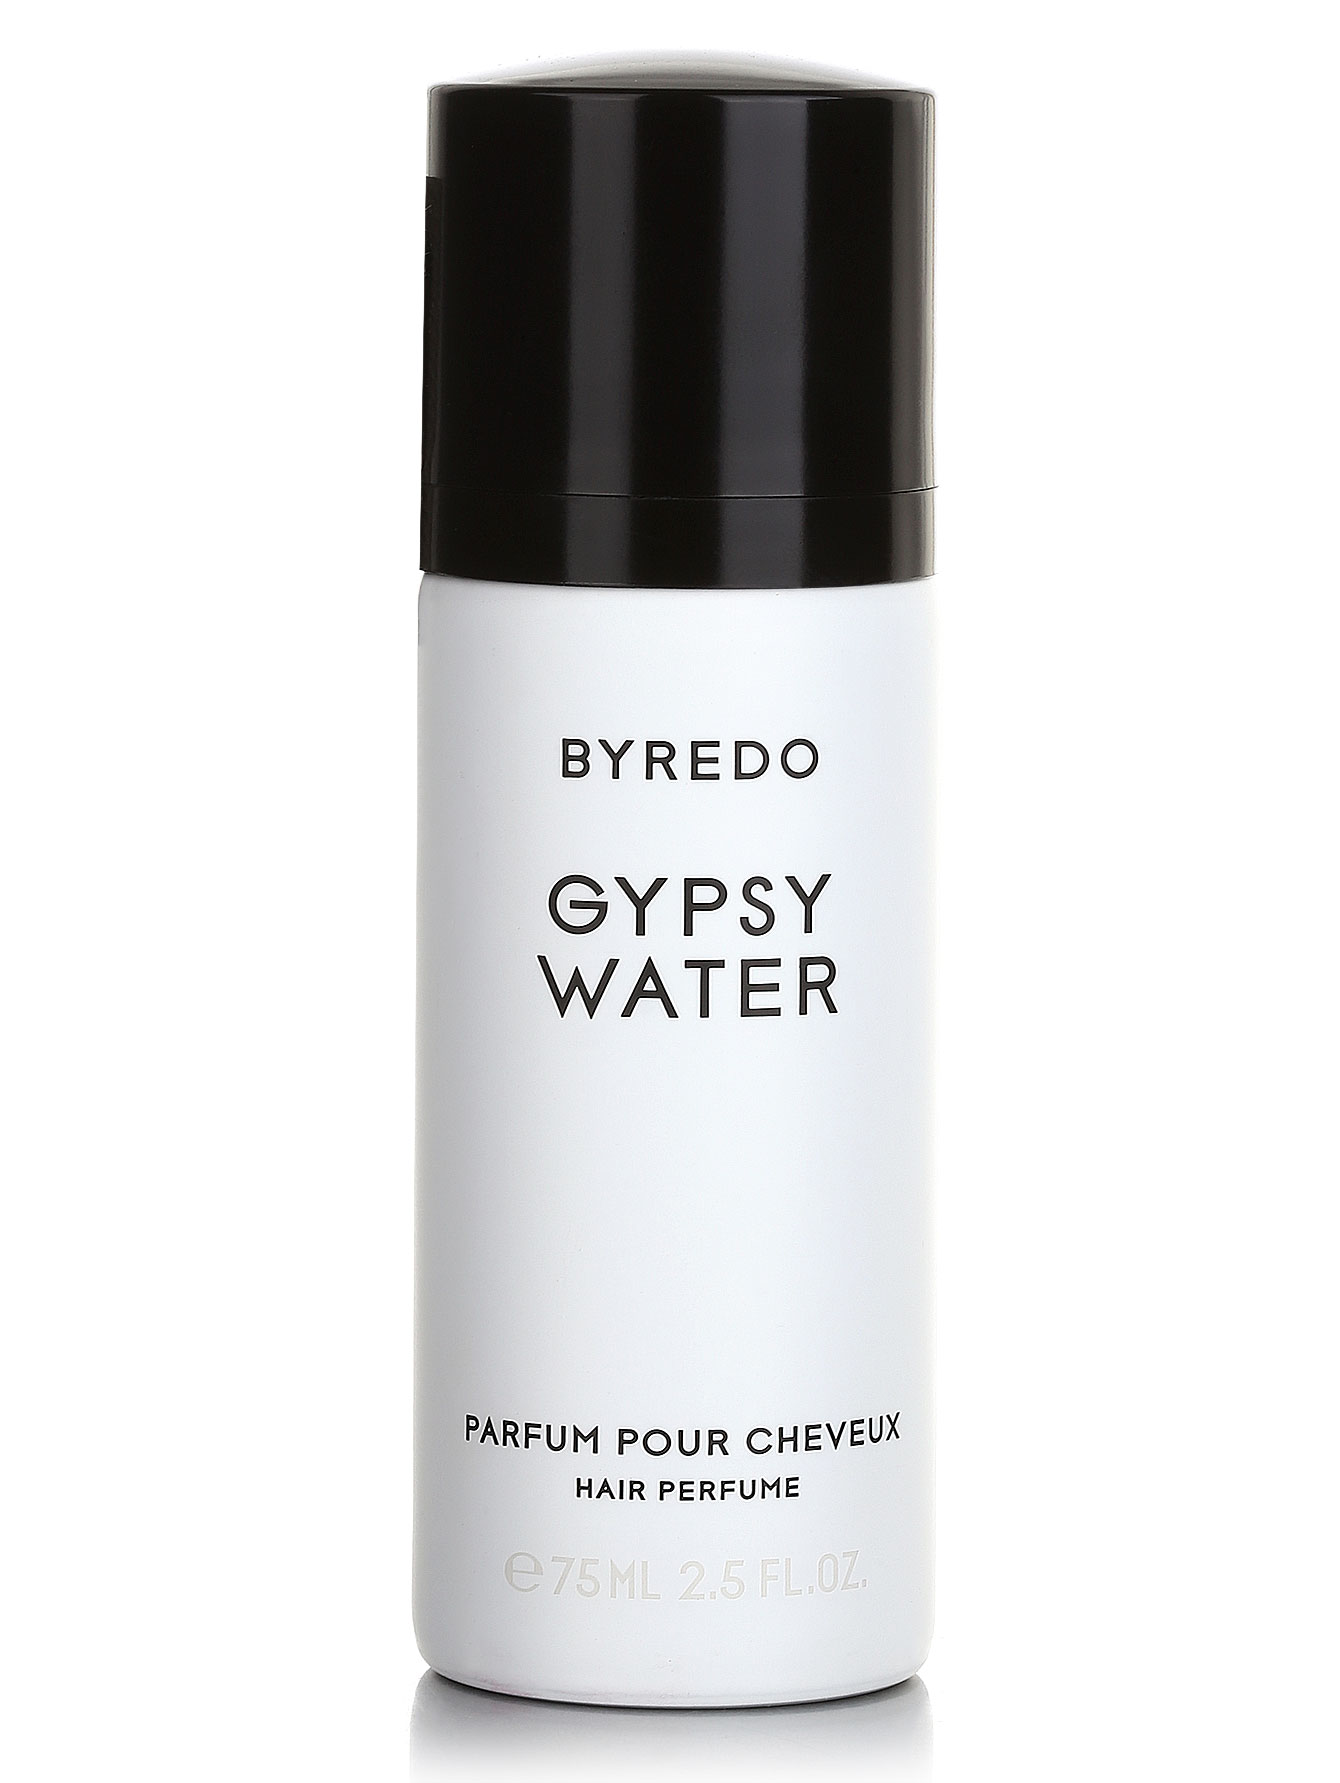  Парфюм для волос - Gypsy Water, Hair Care, 75ml - Общий вид